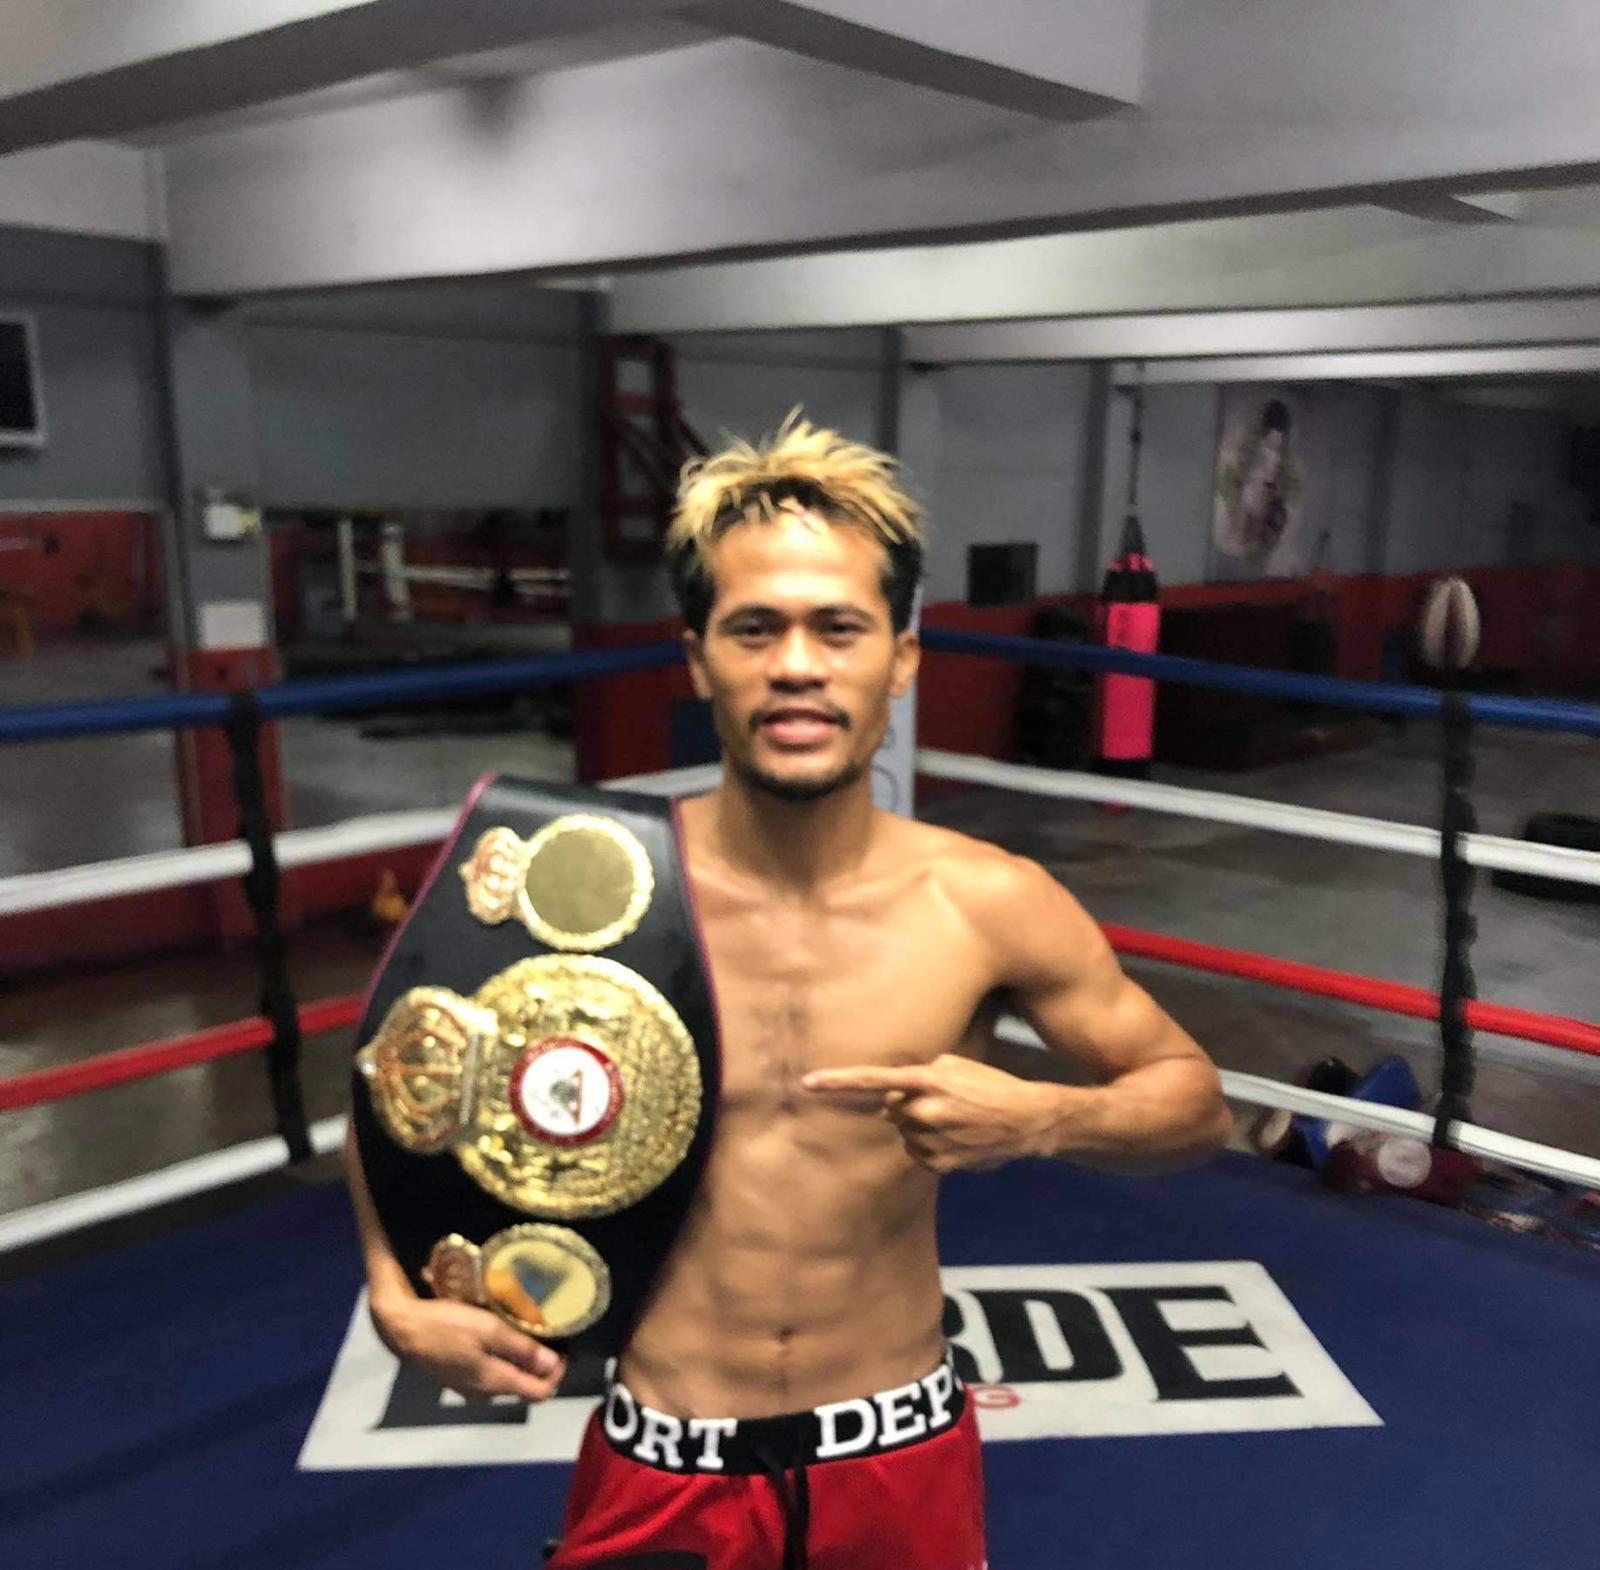 Saludar defeated Paradero to become the new WBA Interim Champion